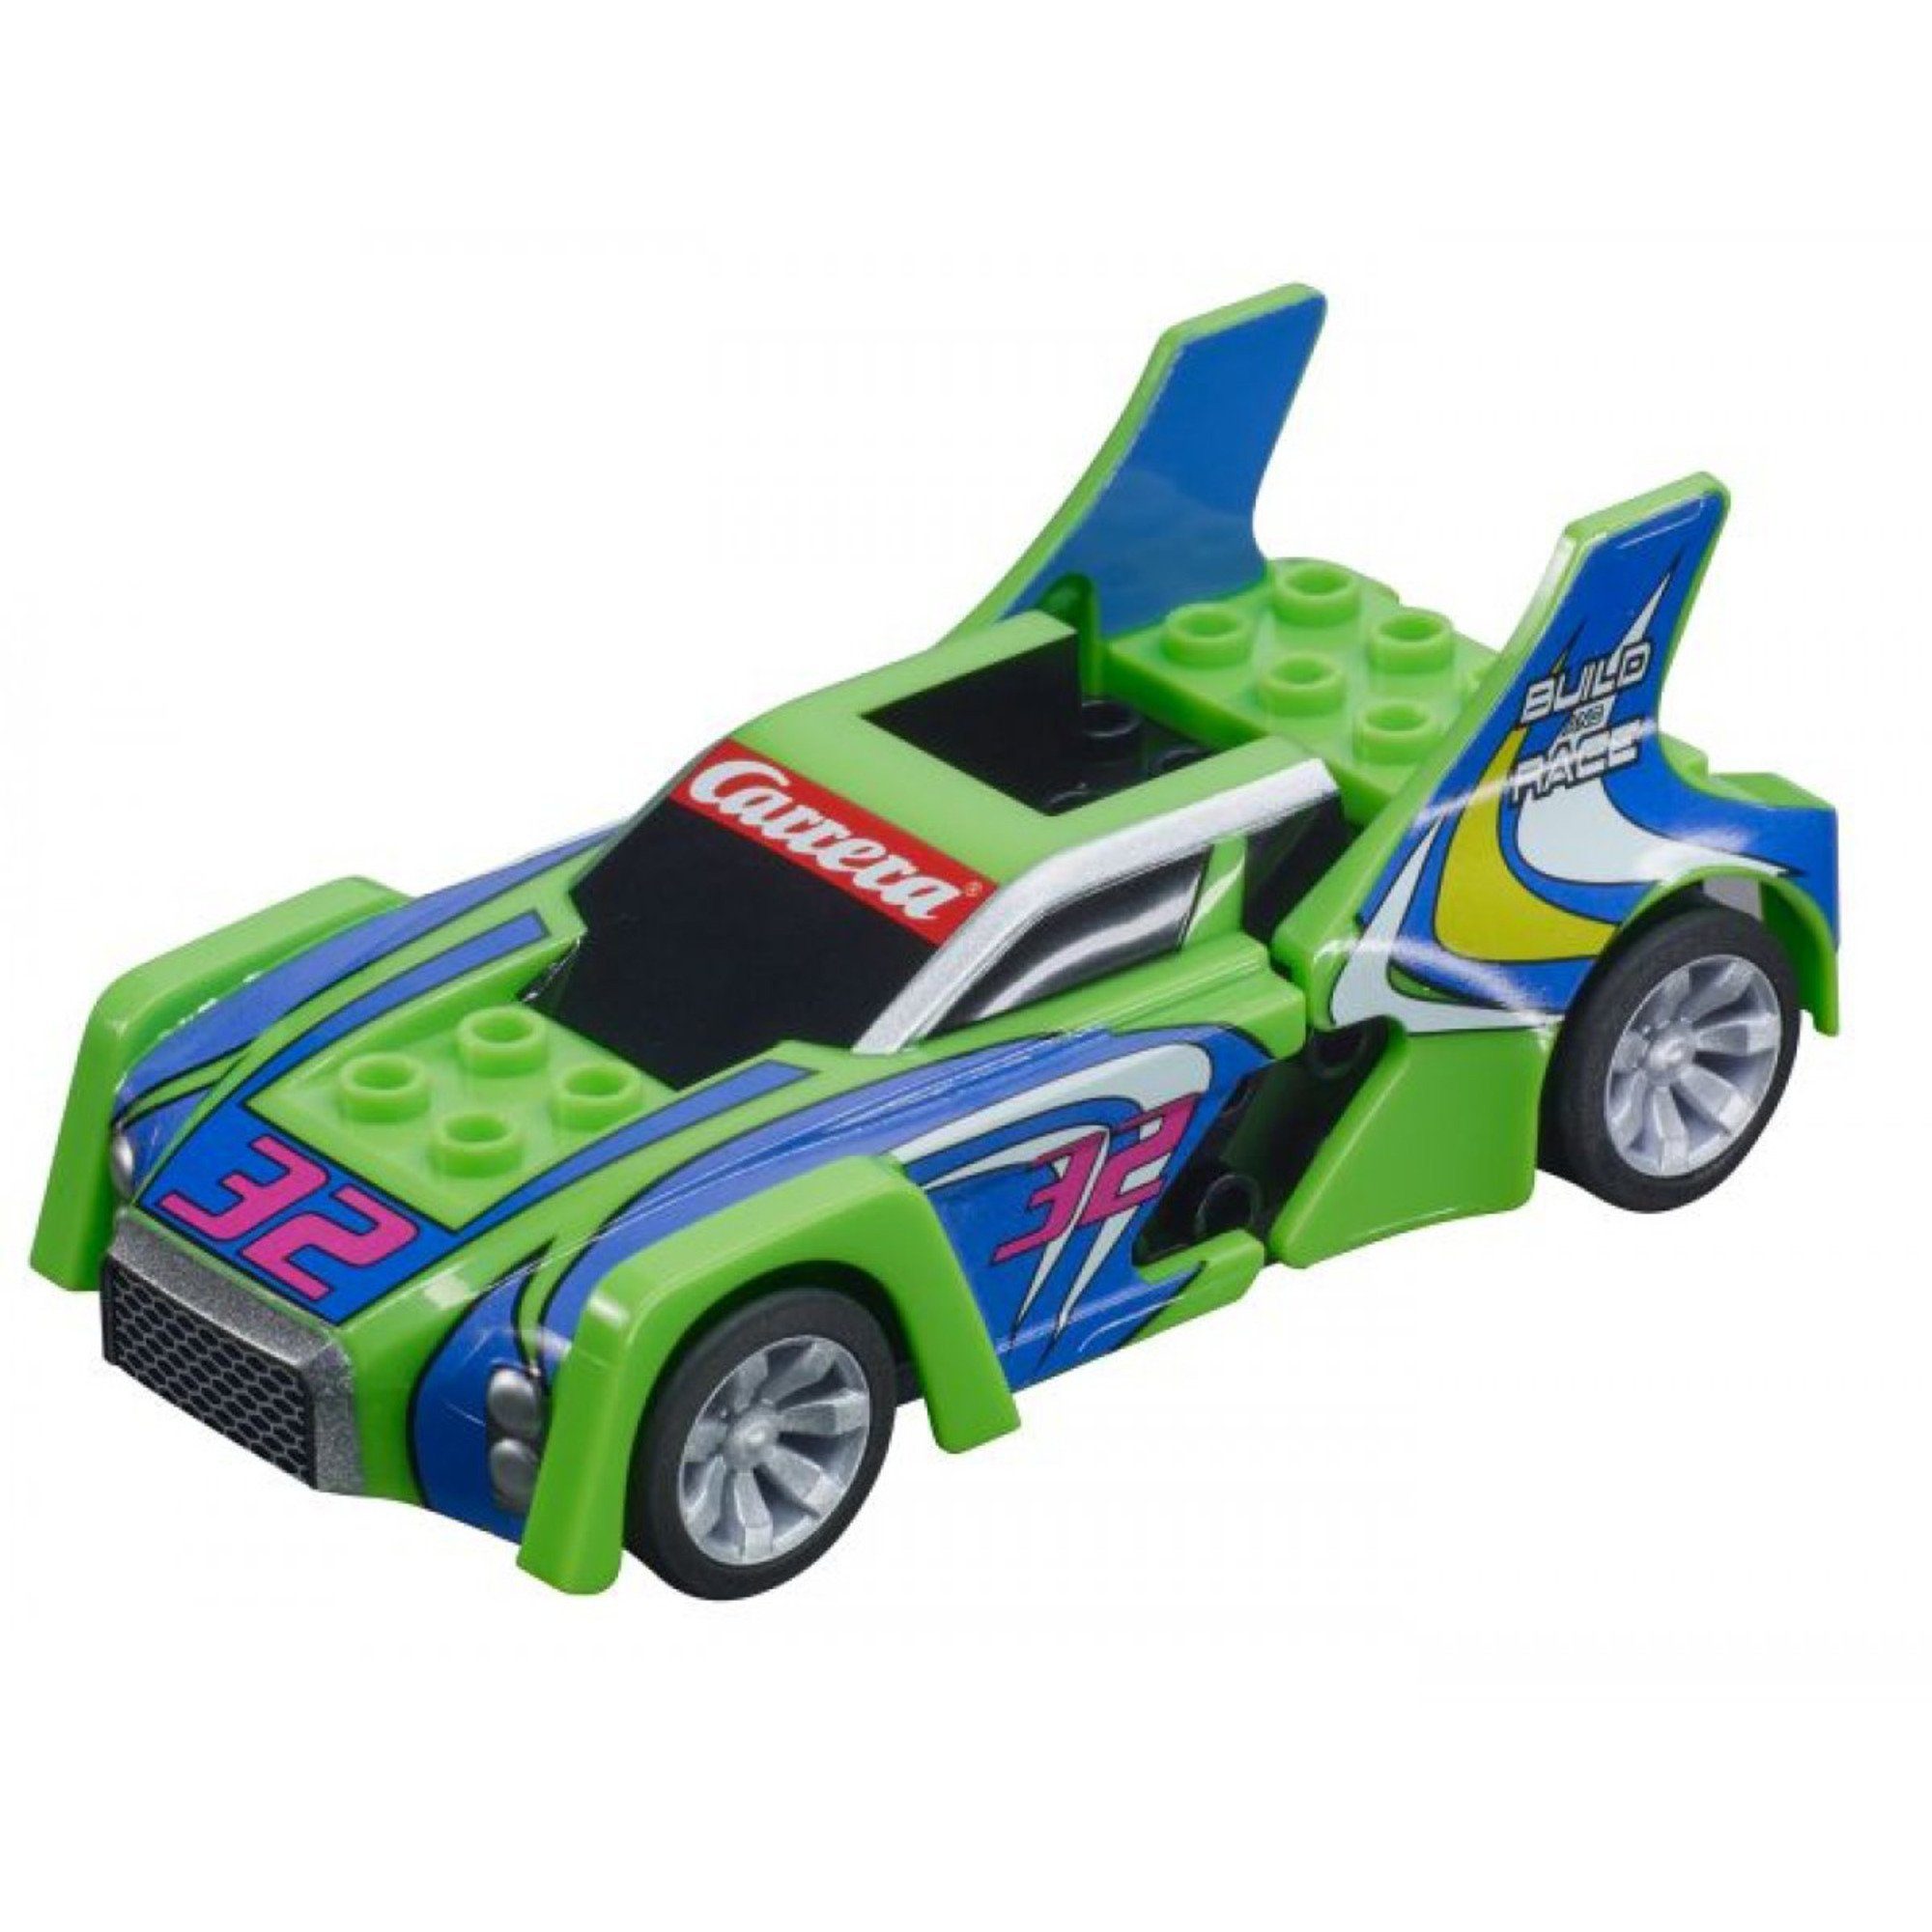 Carrera® Spielzeug-Auto Carrera GO!!! Build 'n Race - Race Car, Rennwagen